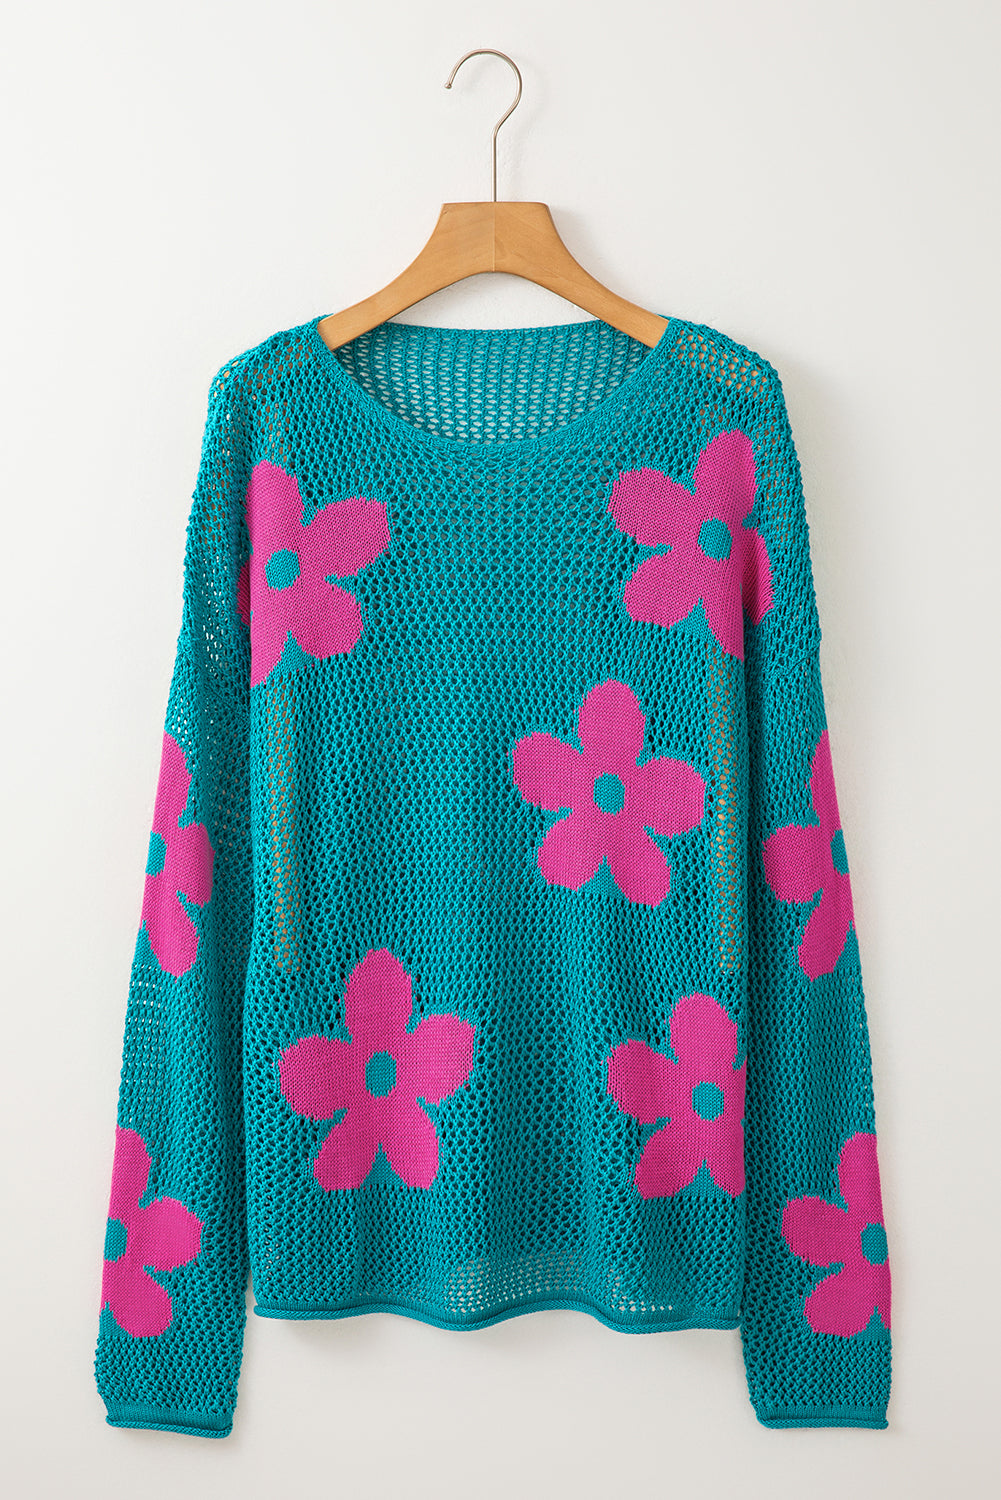 Sea Green Big Flower Hollowed Knit Drop Shoulder Sweater